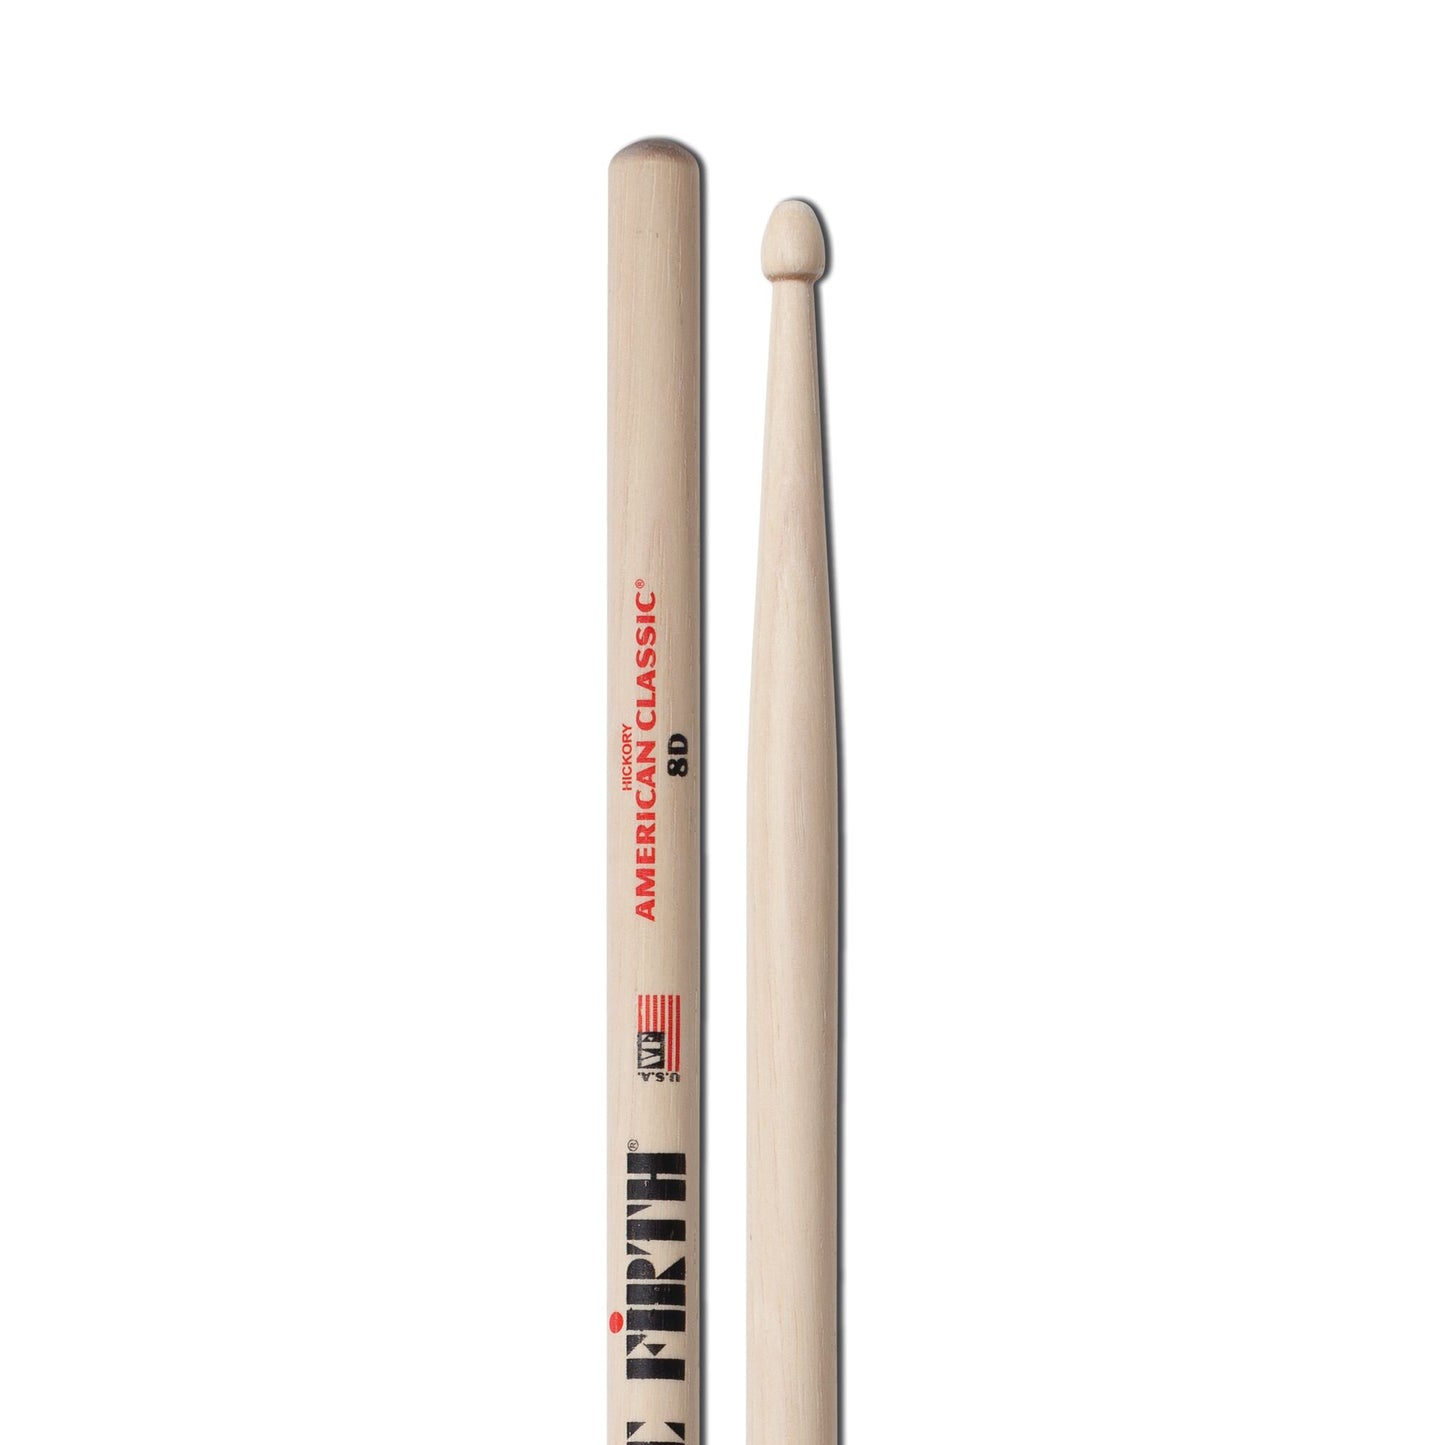 American Classic® 8D Drumsticks